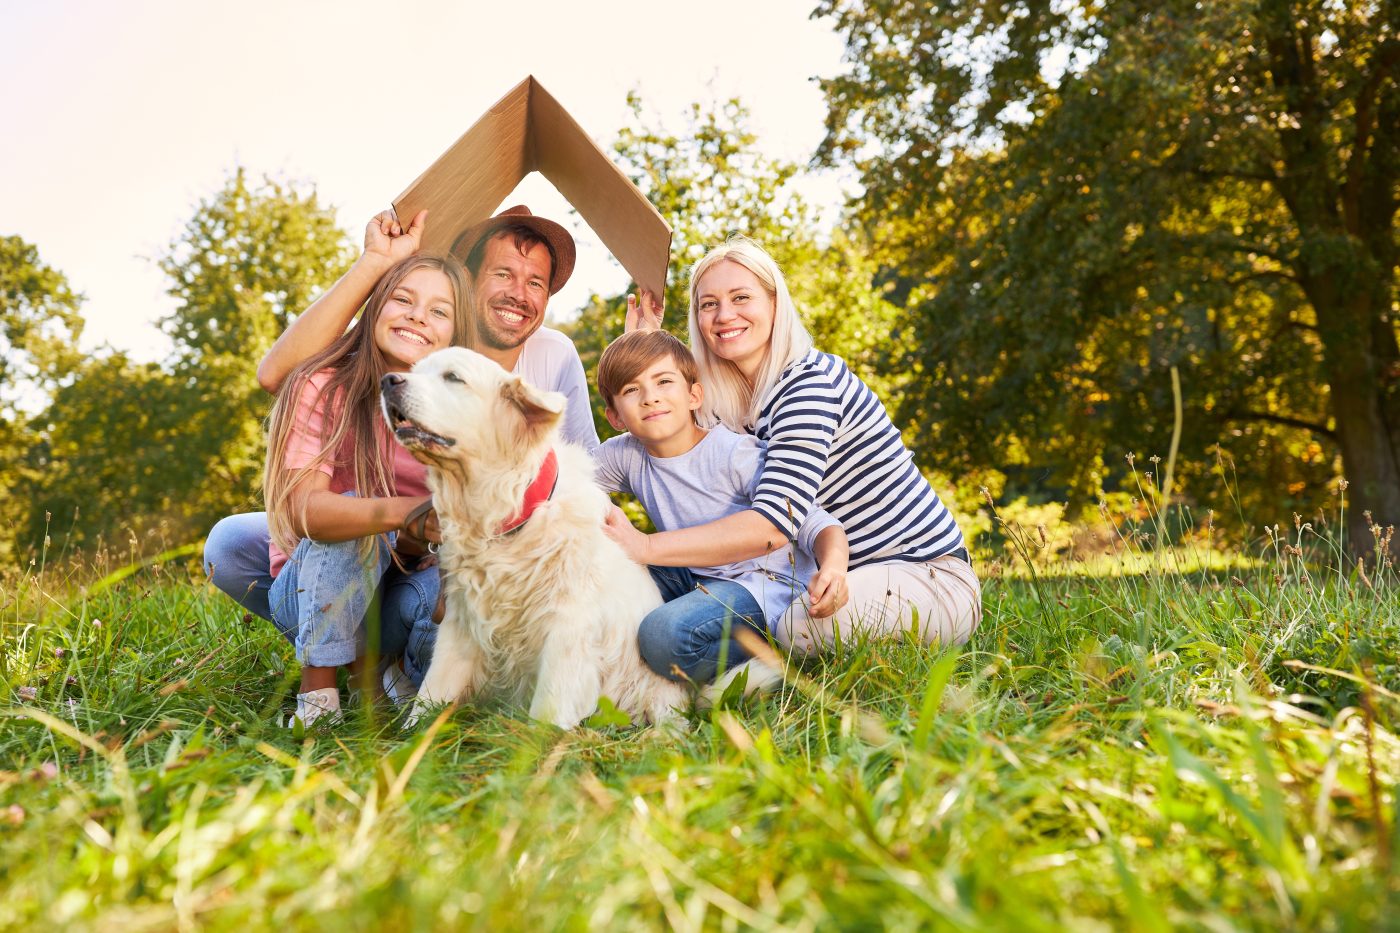 Happy family with dog shuttershock©Robert Kneschke